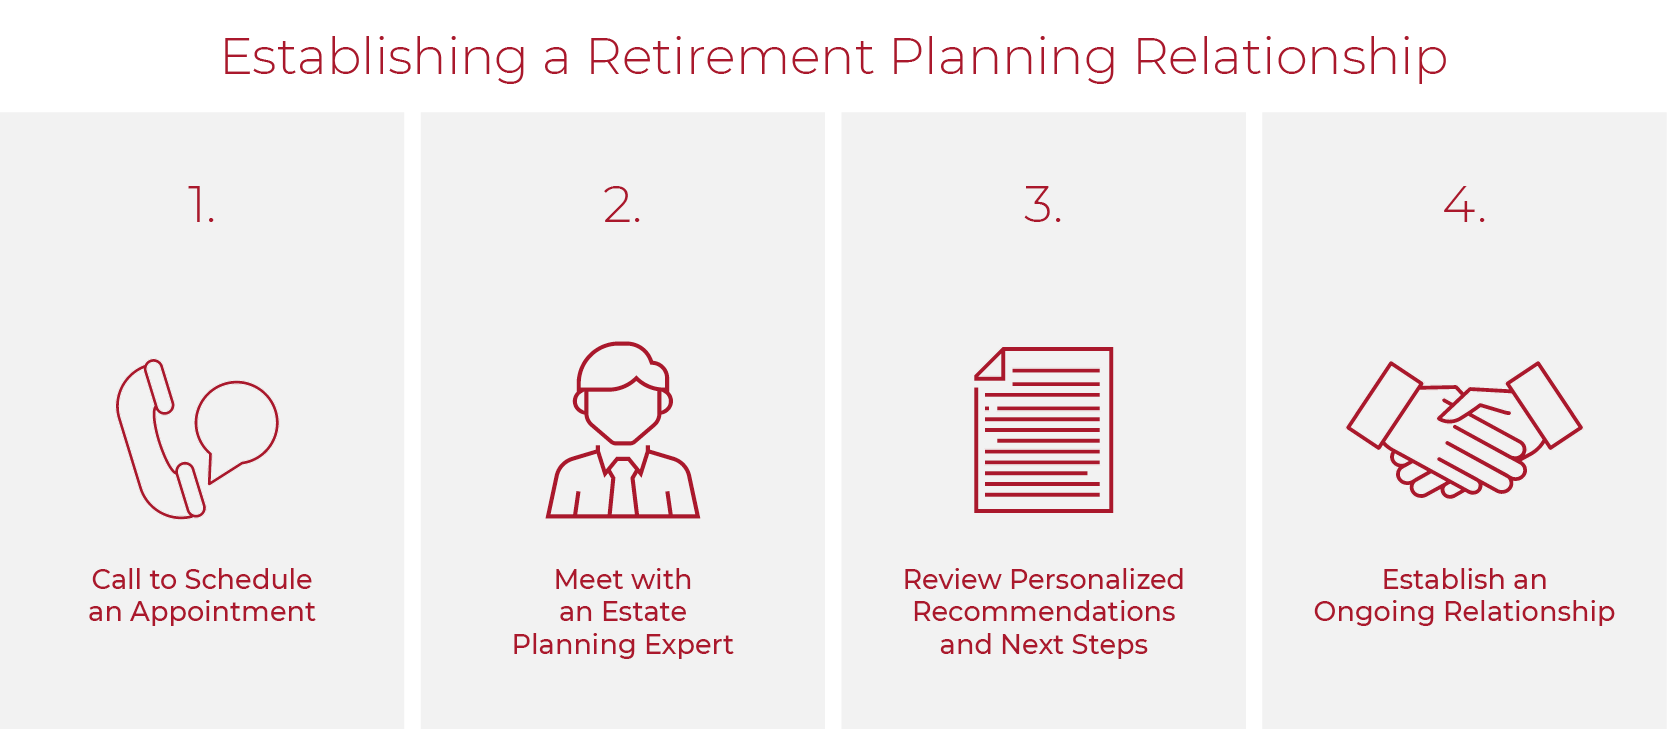 4 steps to establishing a retirement planning relationship